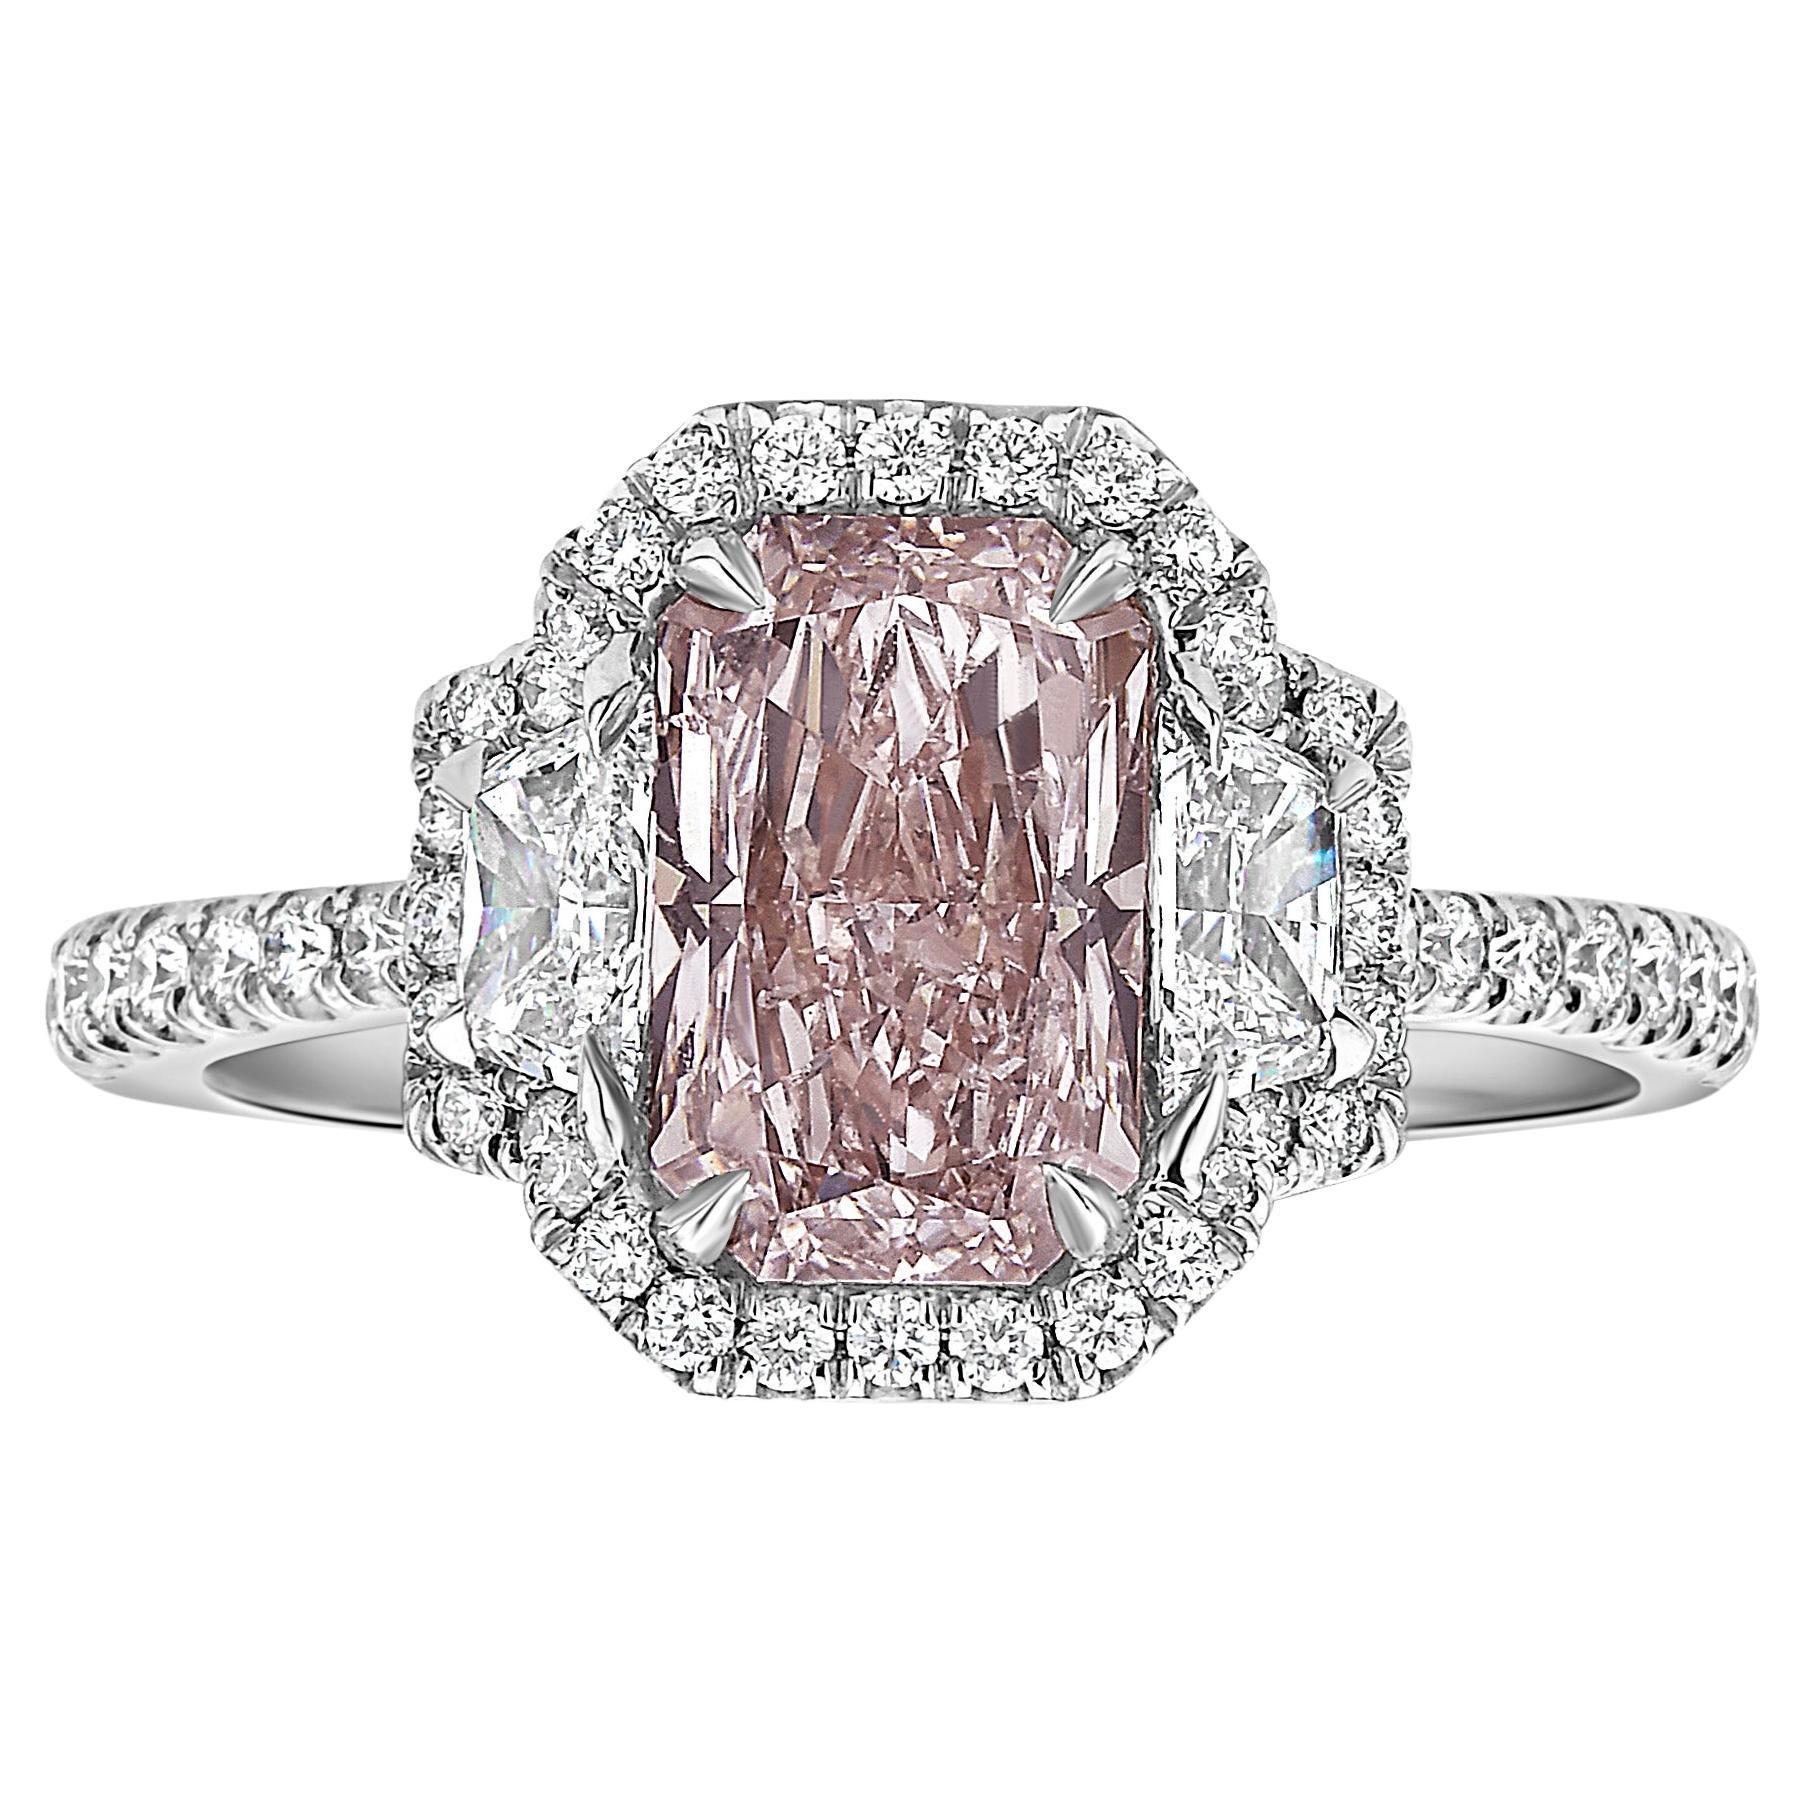 1.5 Carat Fancy Light Orangy Pink Elongated Radiant Diamond ing For Sale